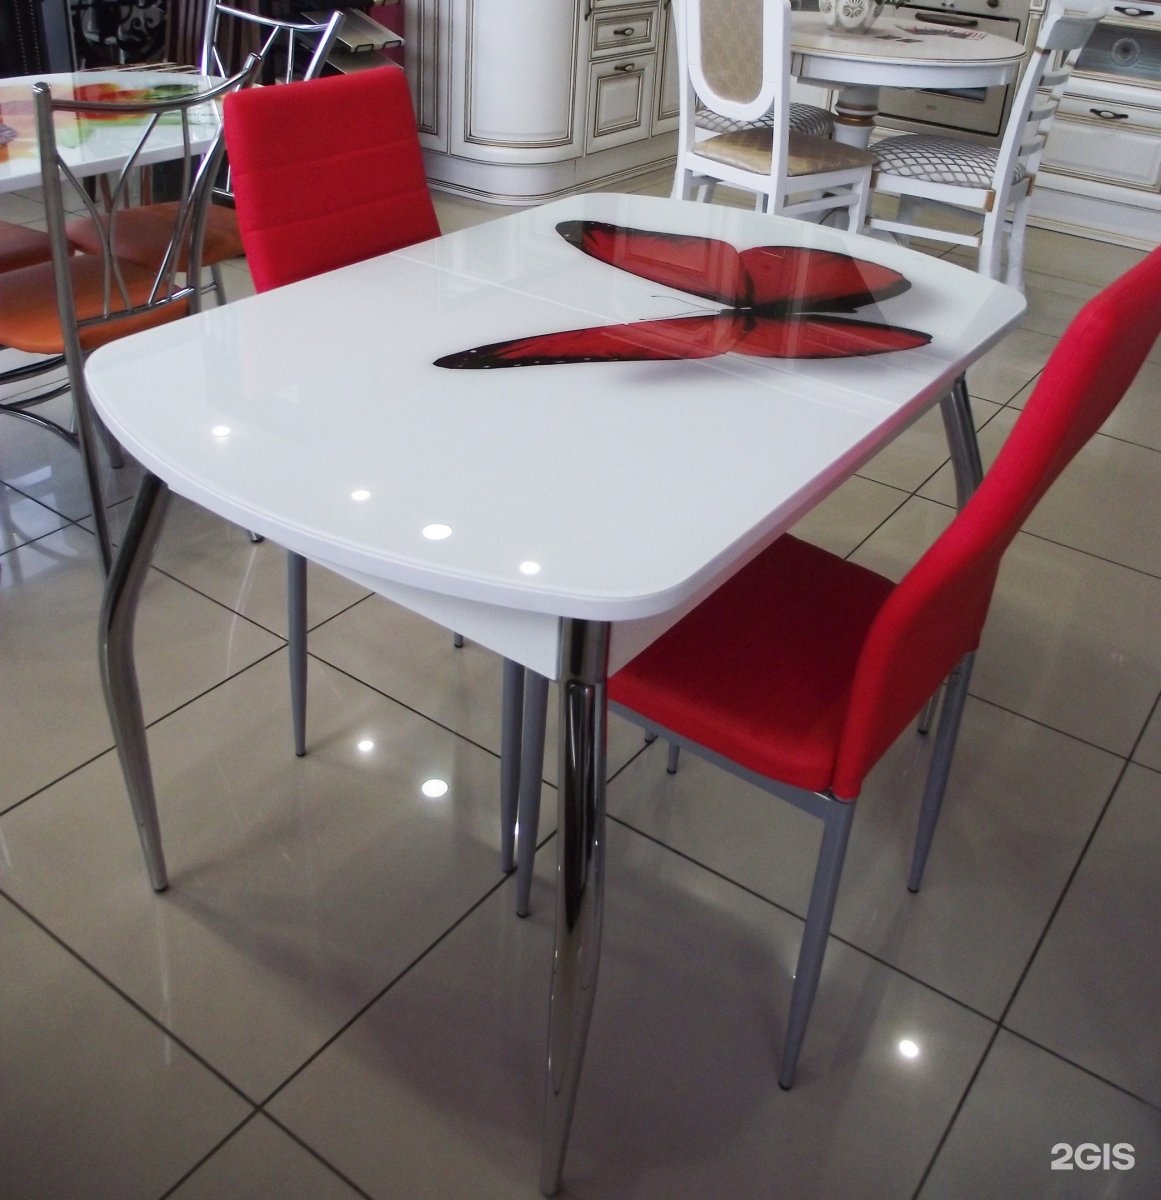 Матовые кухонные столы. Красный кухонный стол. Красный стол на кухню. Стол стеклянный кухонный красный. Красный стеклянный стол для кухни.